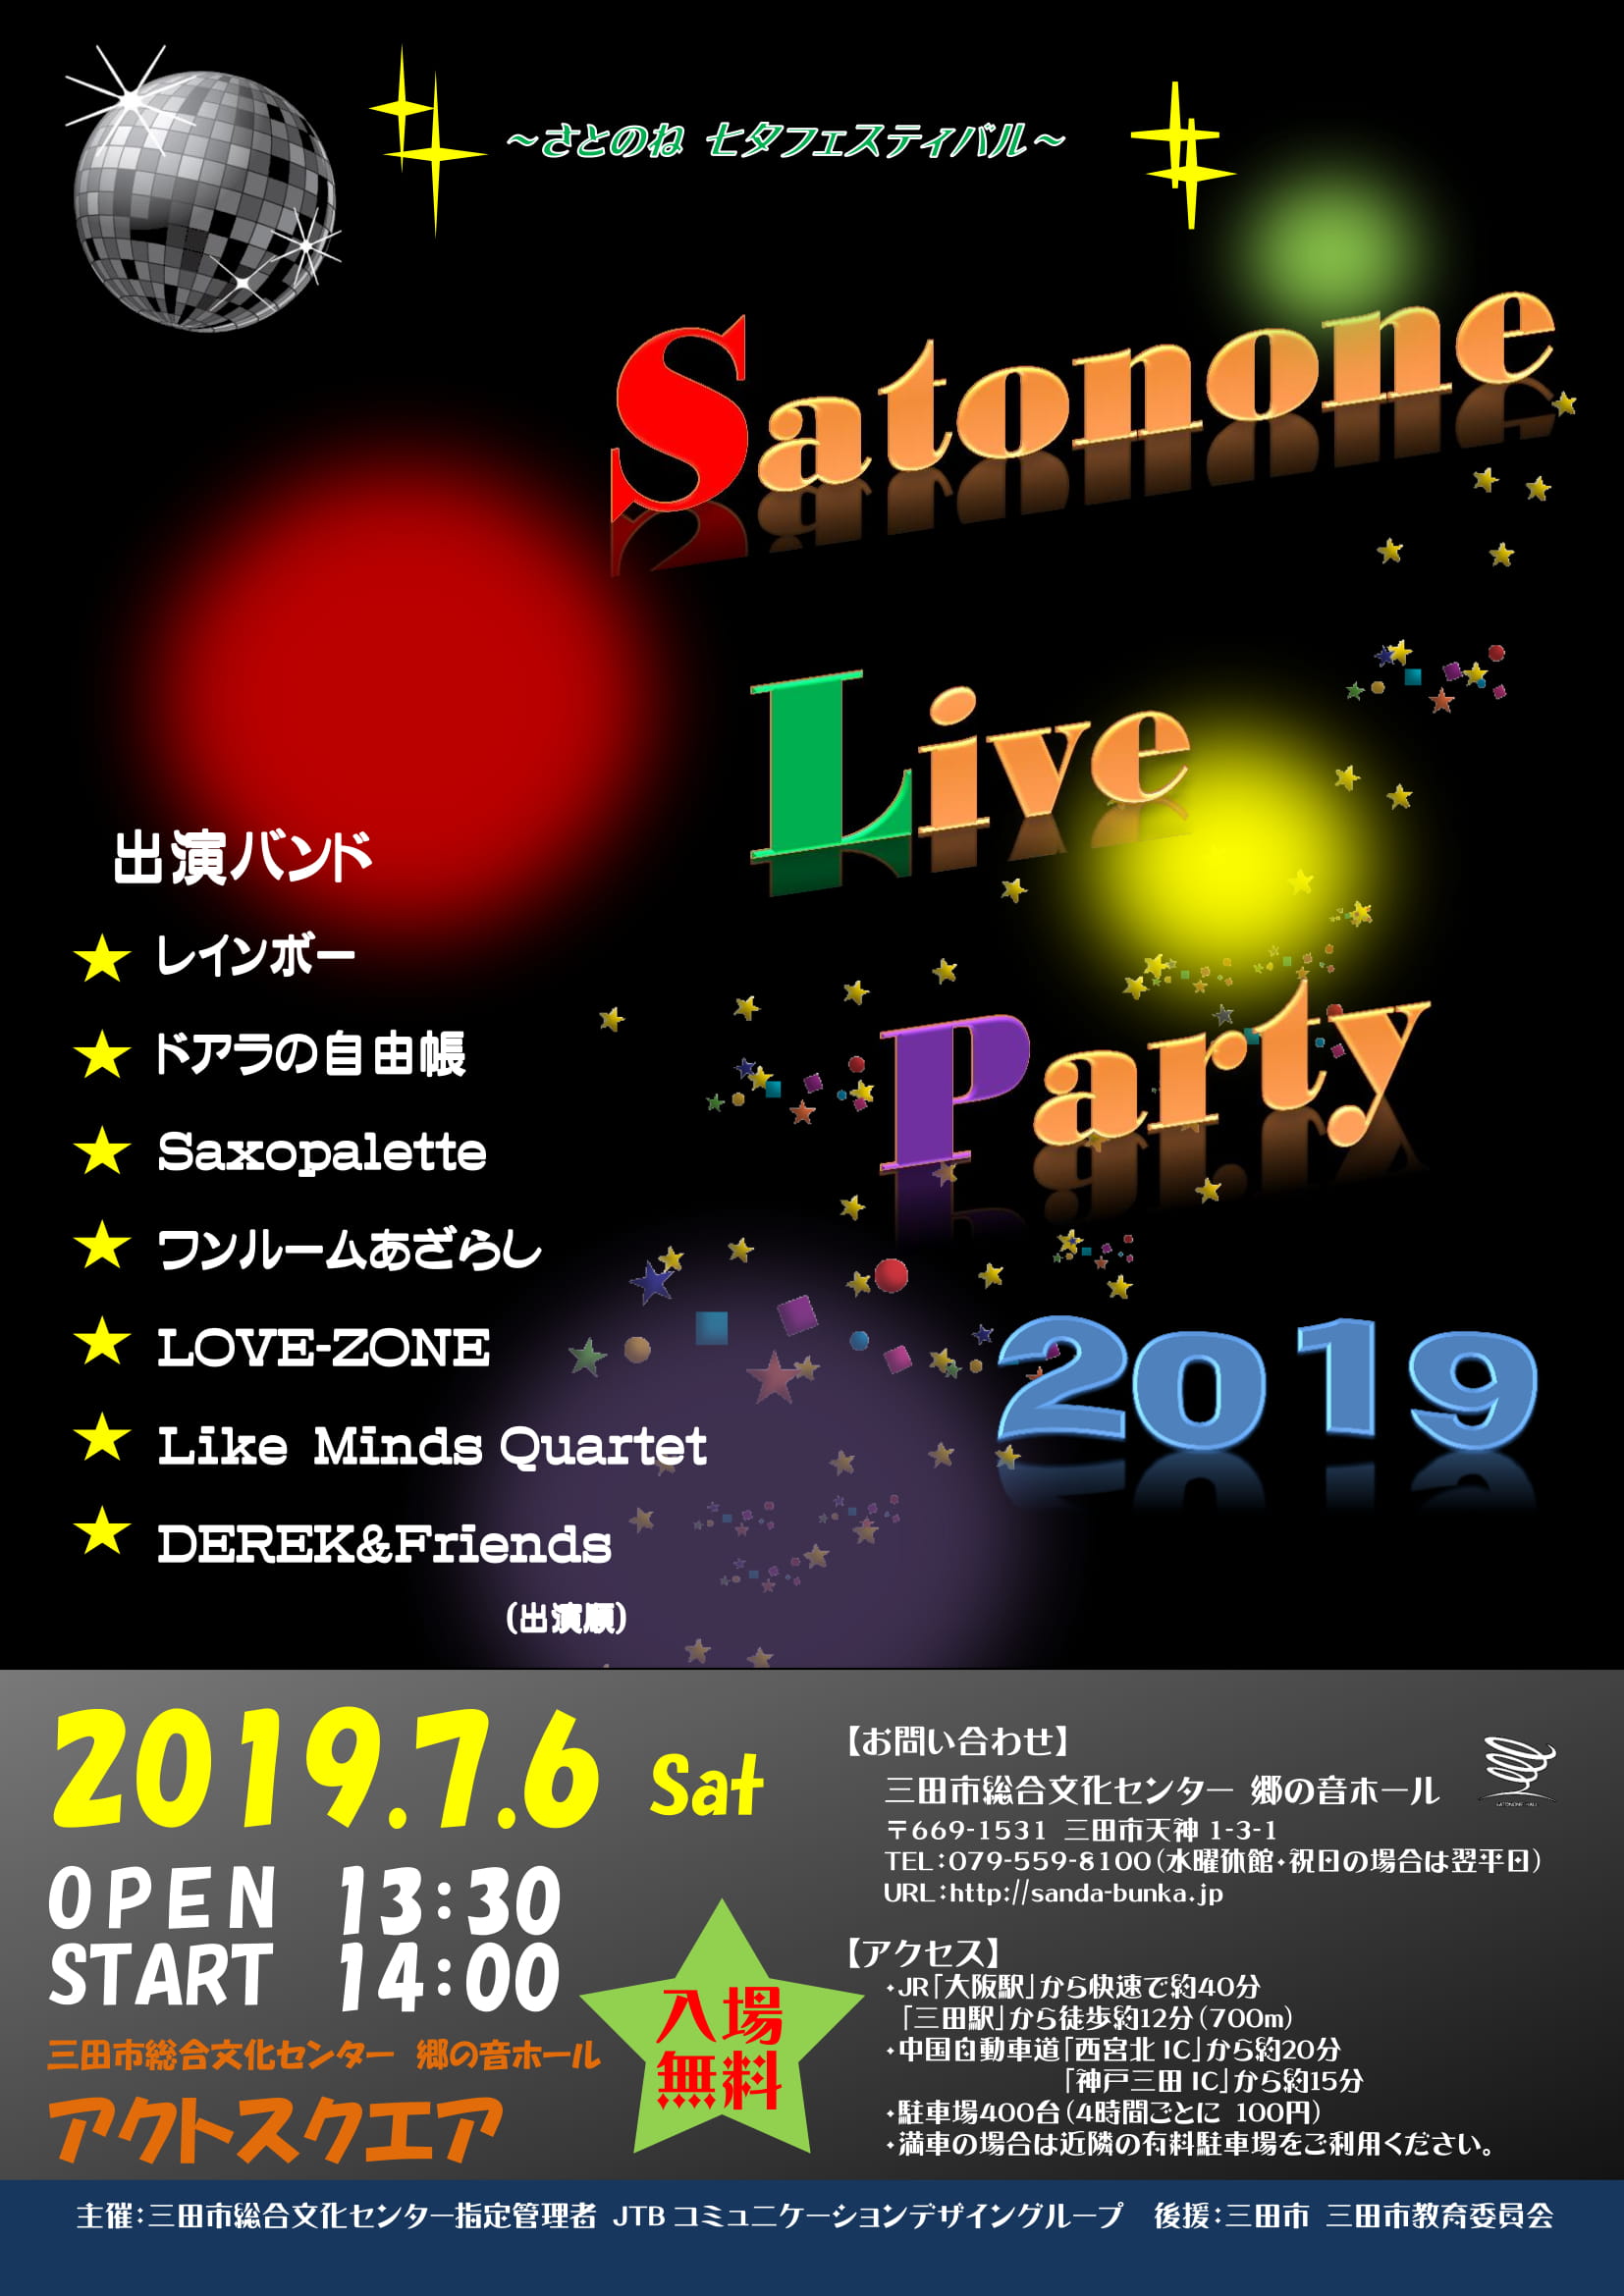 Satonone Live Party 2019